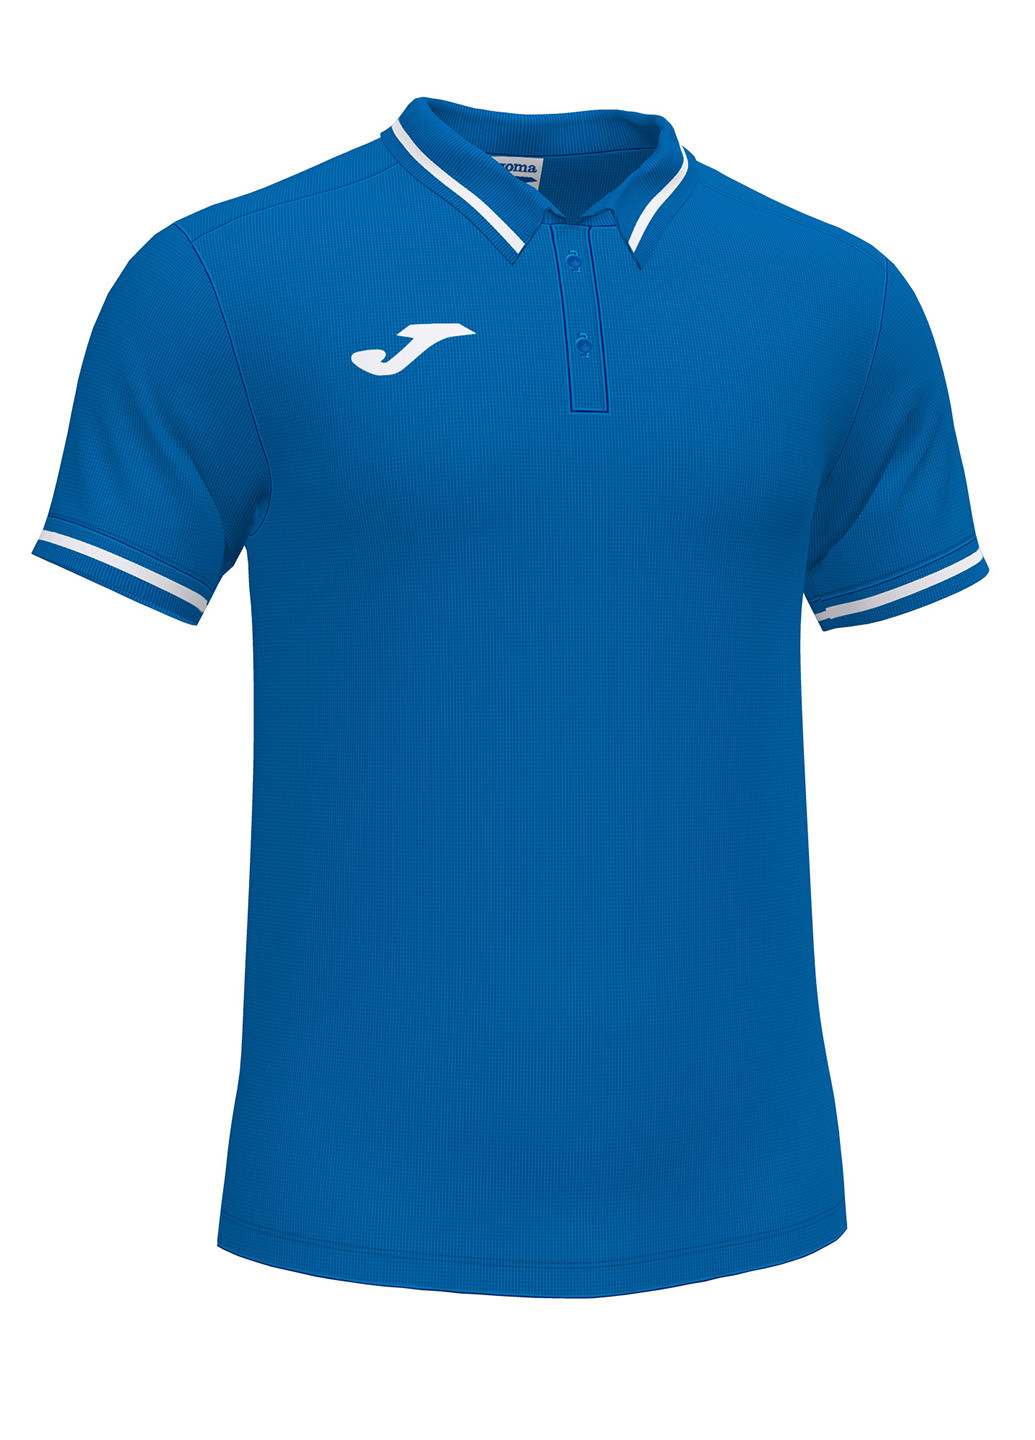 Светло-синяя футболка-поло для мужчин Joma с логотипом